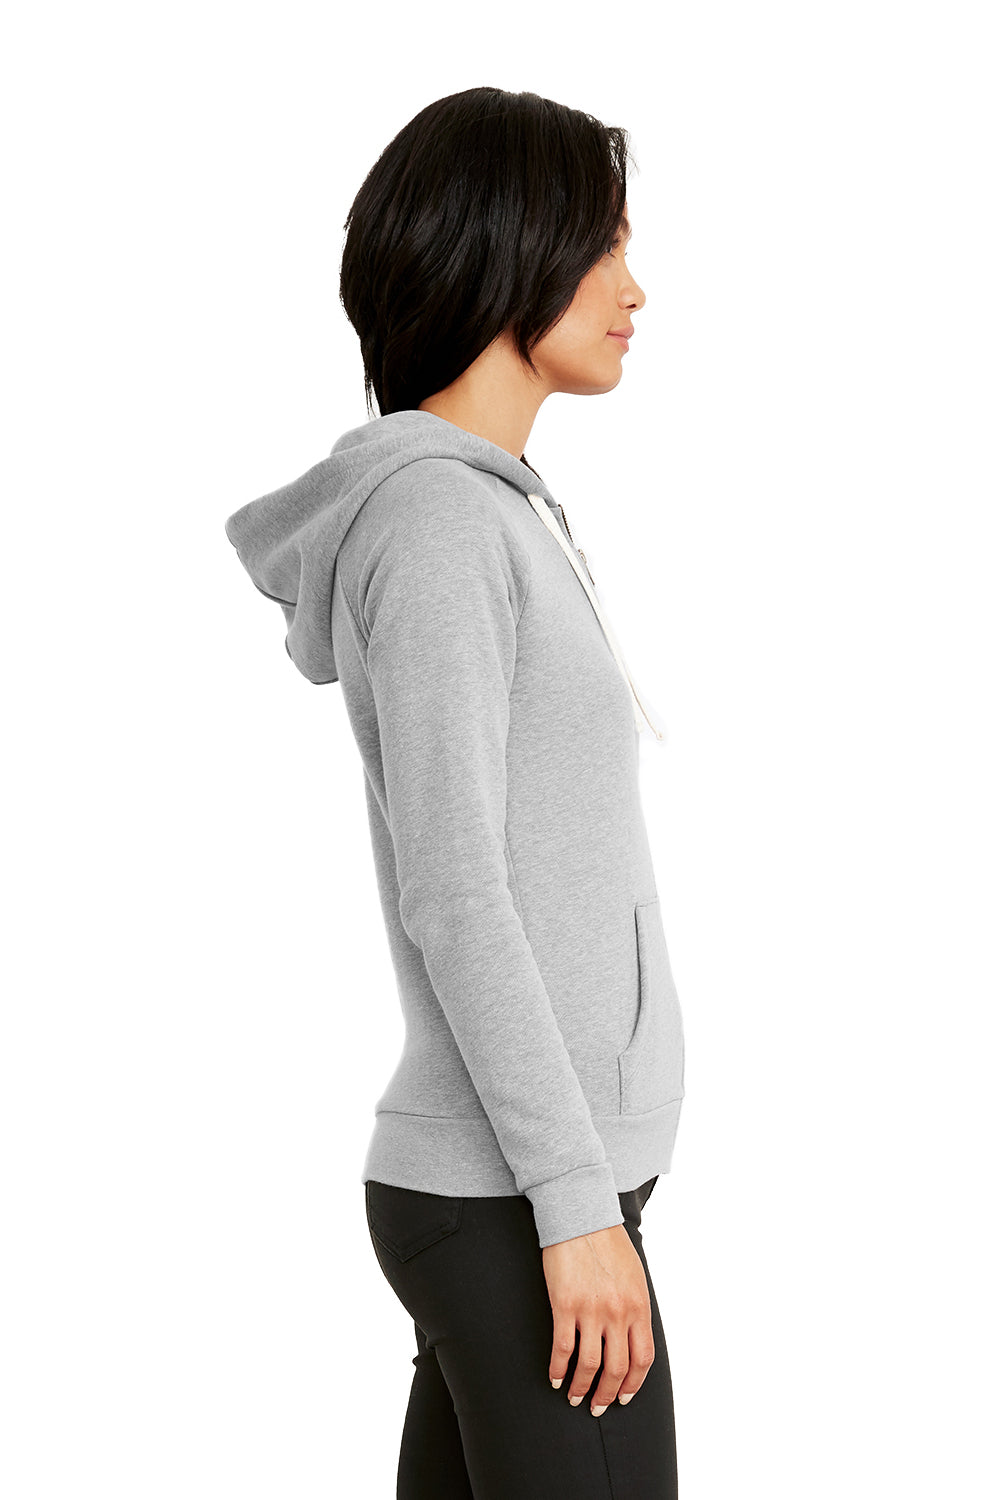 Next Level 9603 Womens PCH Fleece Full Zip Hooded Sweatshirt Hoodie Heather Grey Side